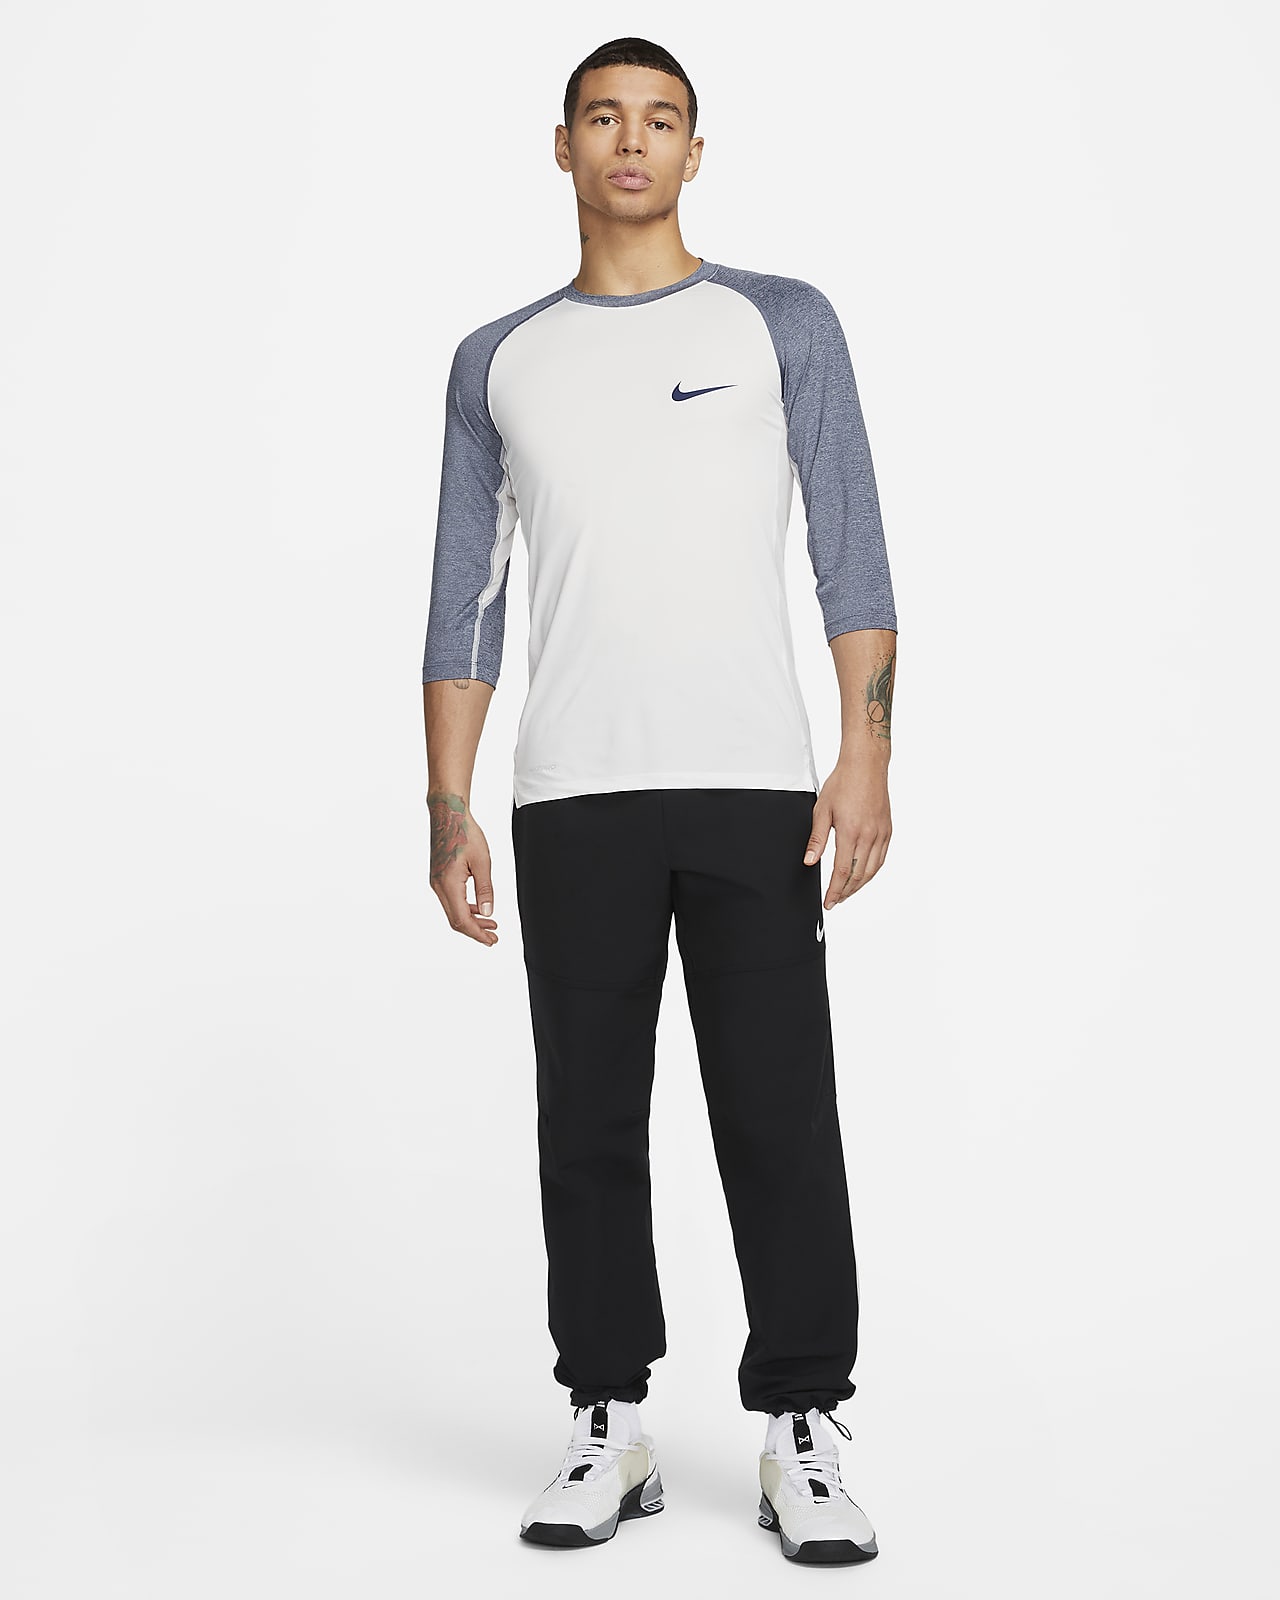 Nike Dri-FIT Men's 3/4-Length Sleeve Baseball Nike.com